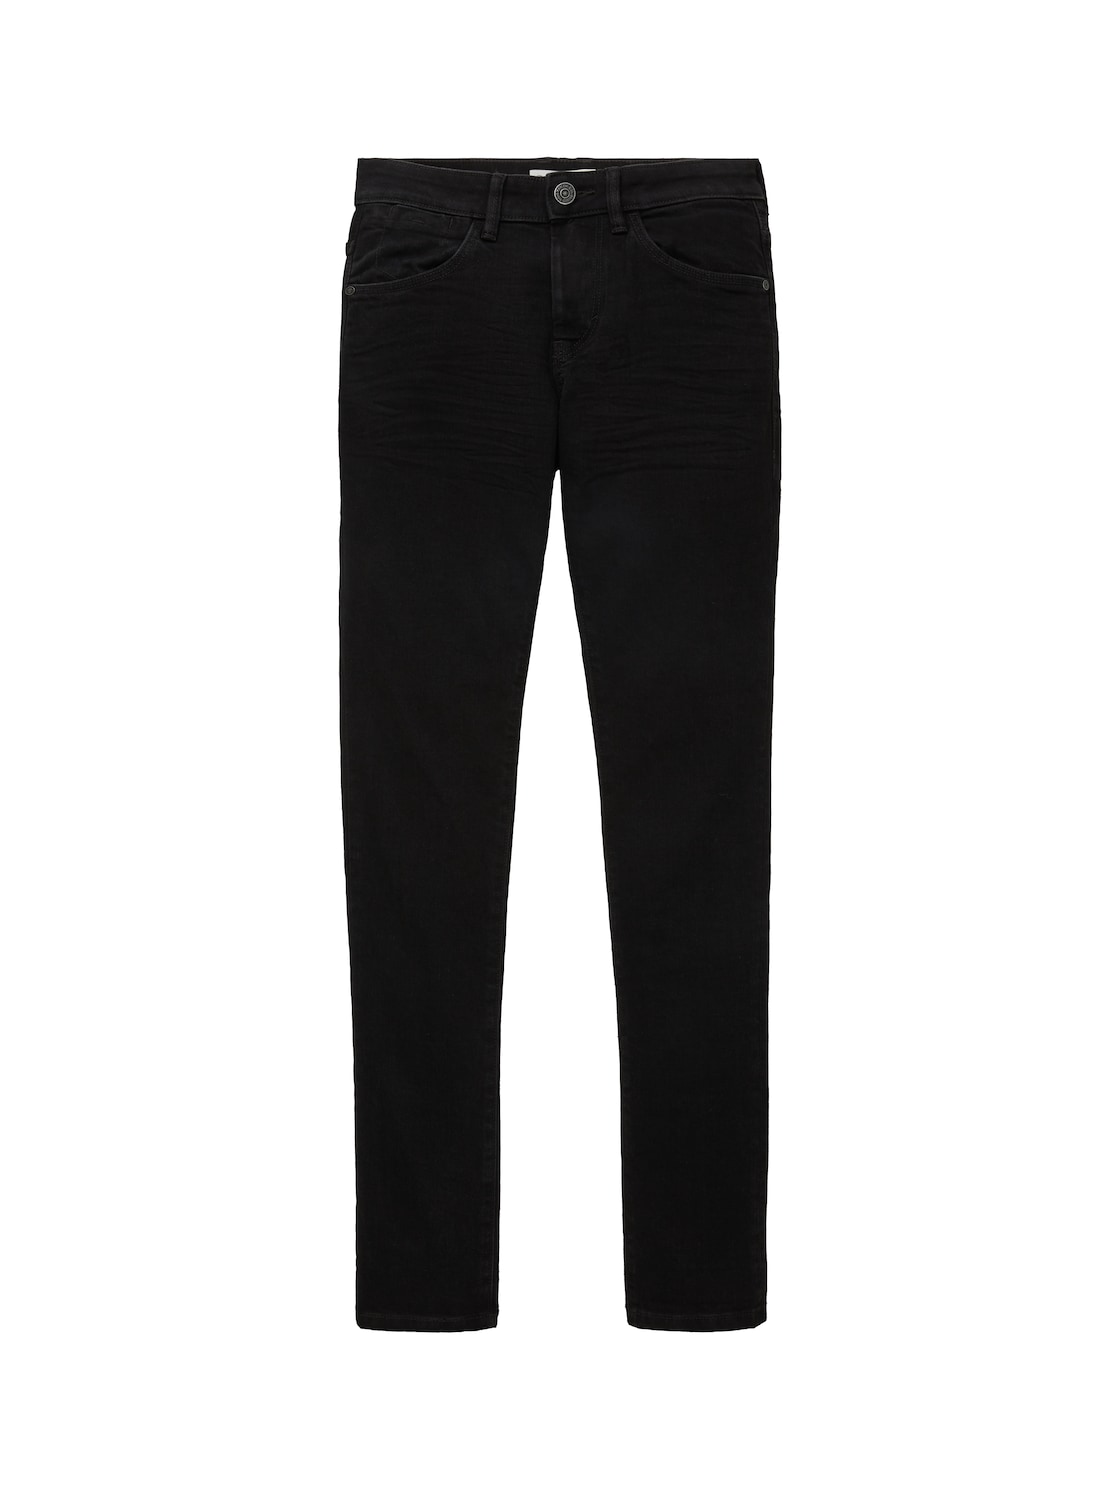 TOM TAILOR Herren Troy Slim Jeans, schwarz, Logo Print, Gr. 31/34 von Tom Tailor